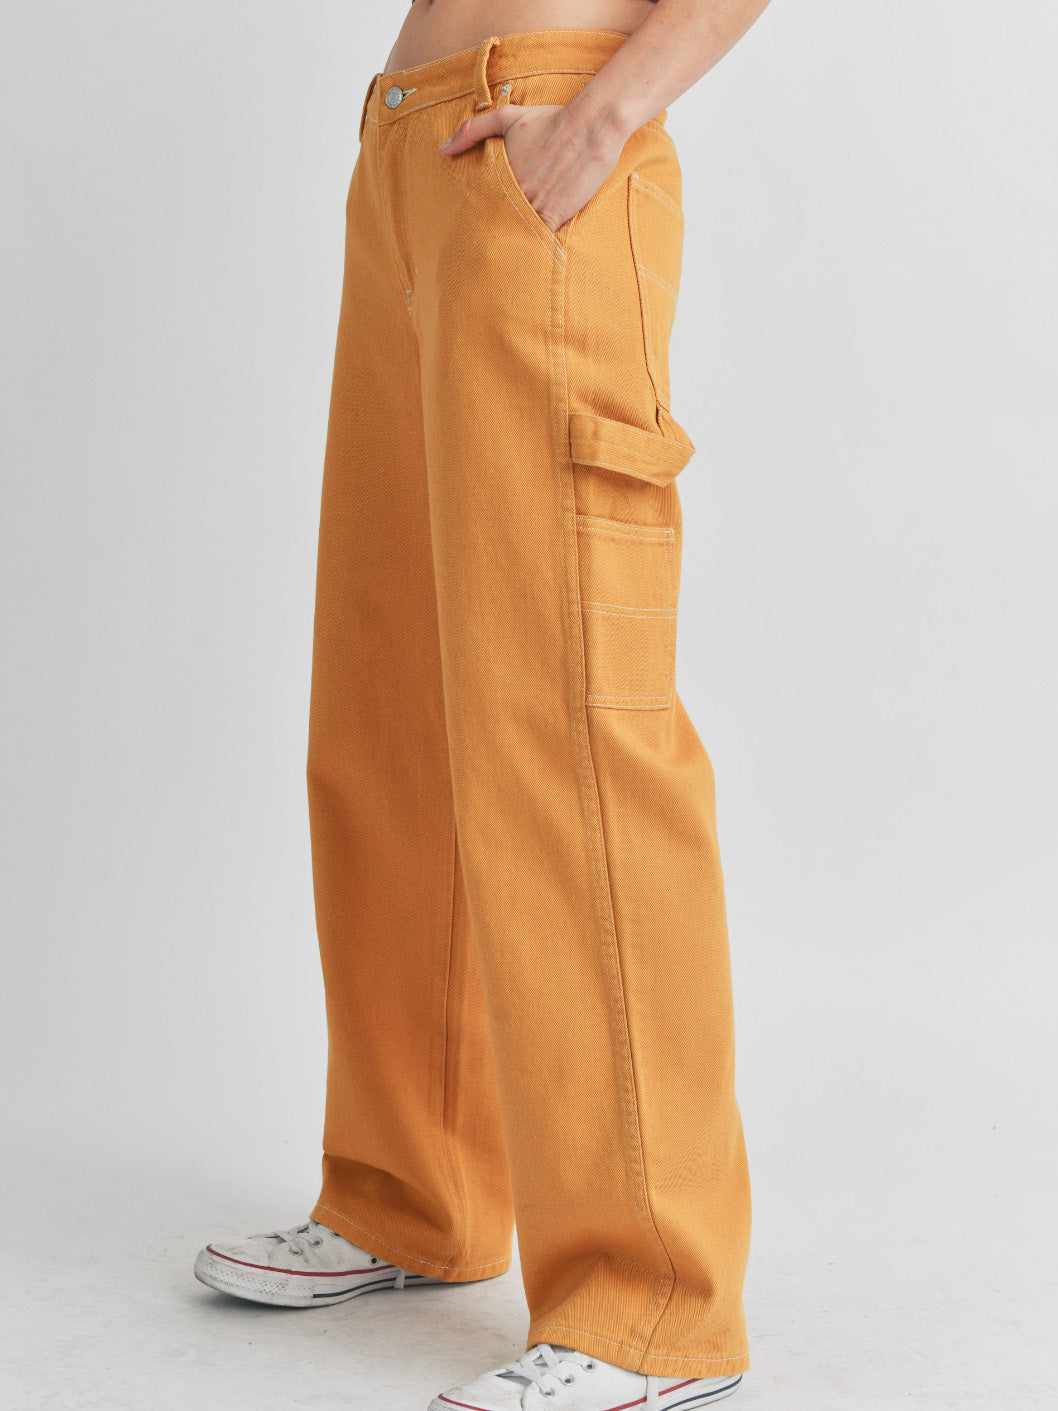 Yellow Linen high waisted pleated Women Dress Pants | Sumissura